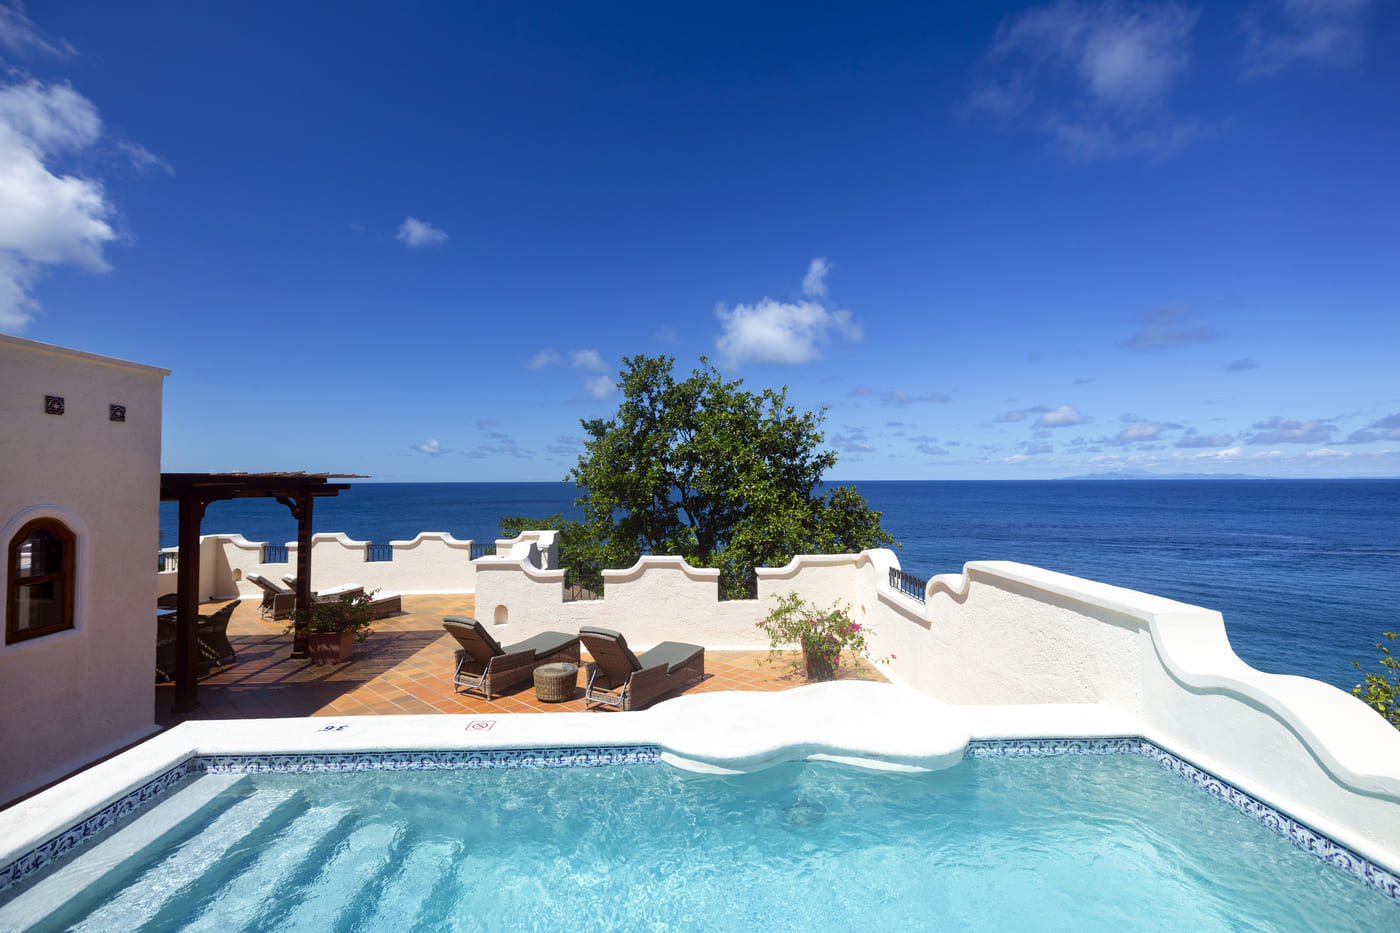 3 Bedroom Rooftop terrace Ocean view Villa Suite + Pool at Cap Maison Smugglers Cove